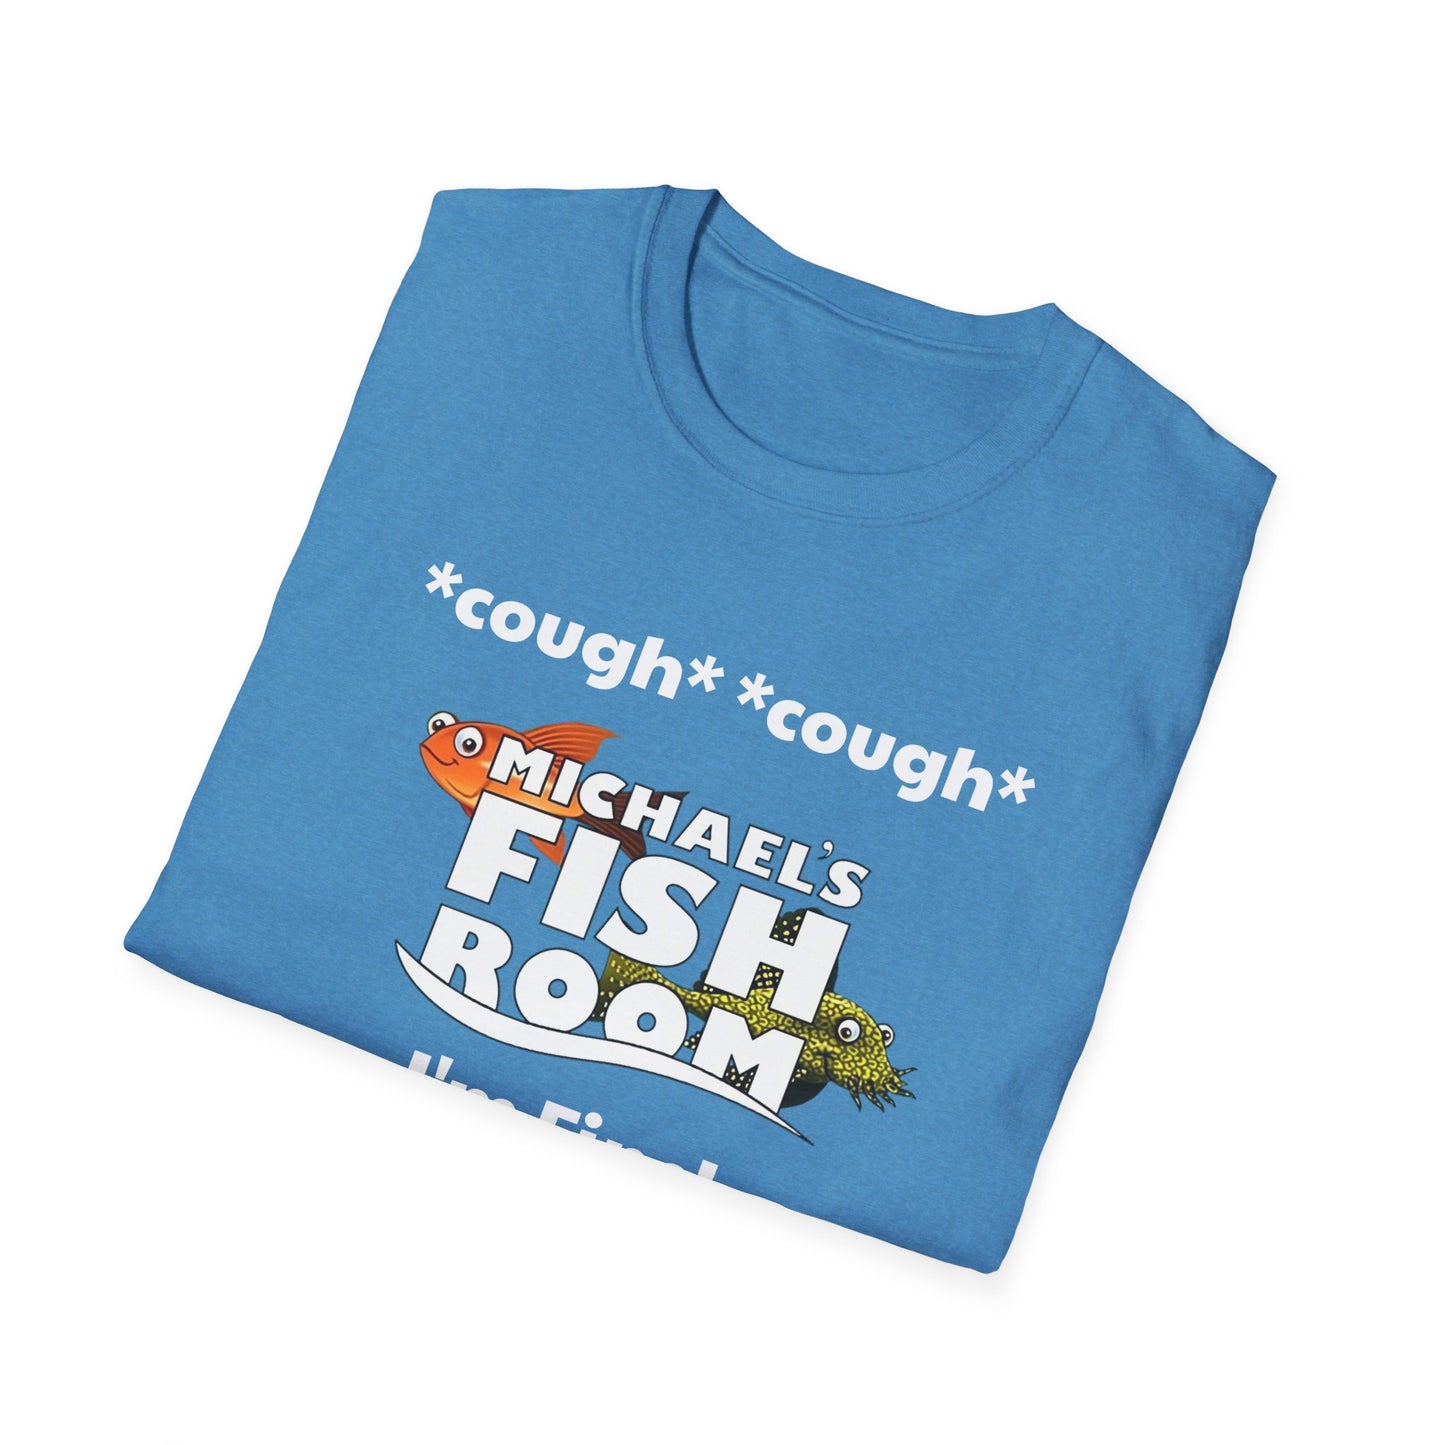 Michael's Fish Room Cough, Cough, I'm Fine - Unisex Softstyle T-Shirt